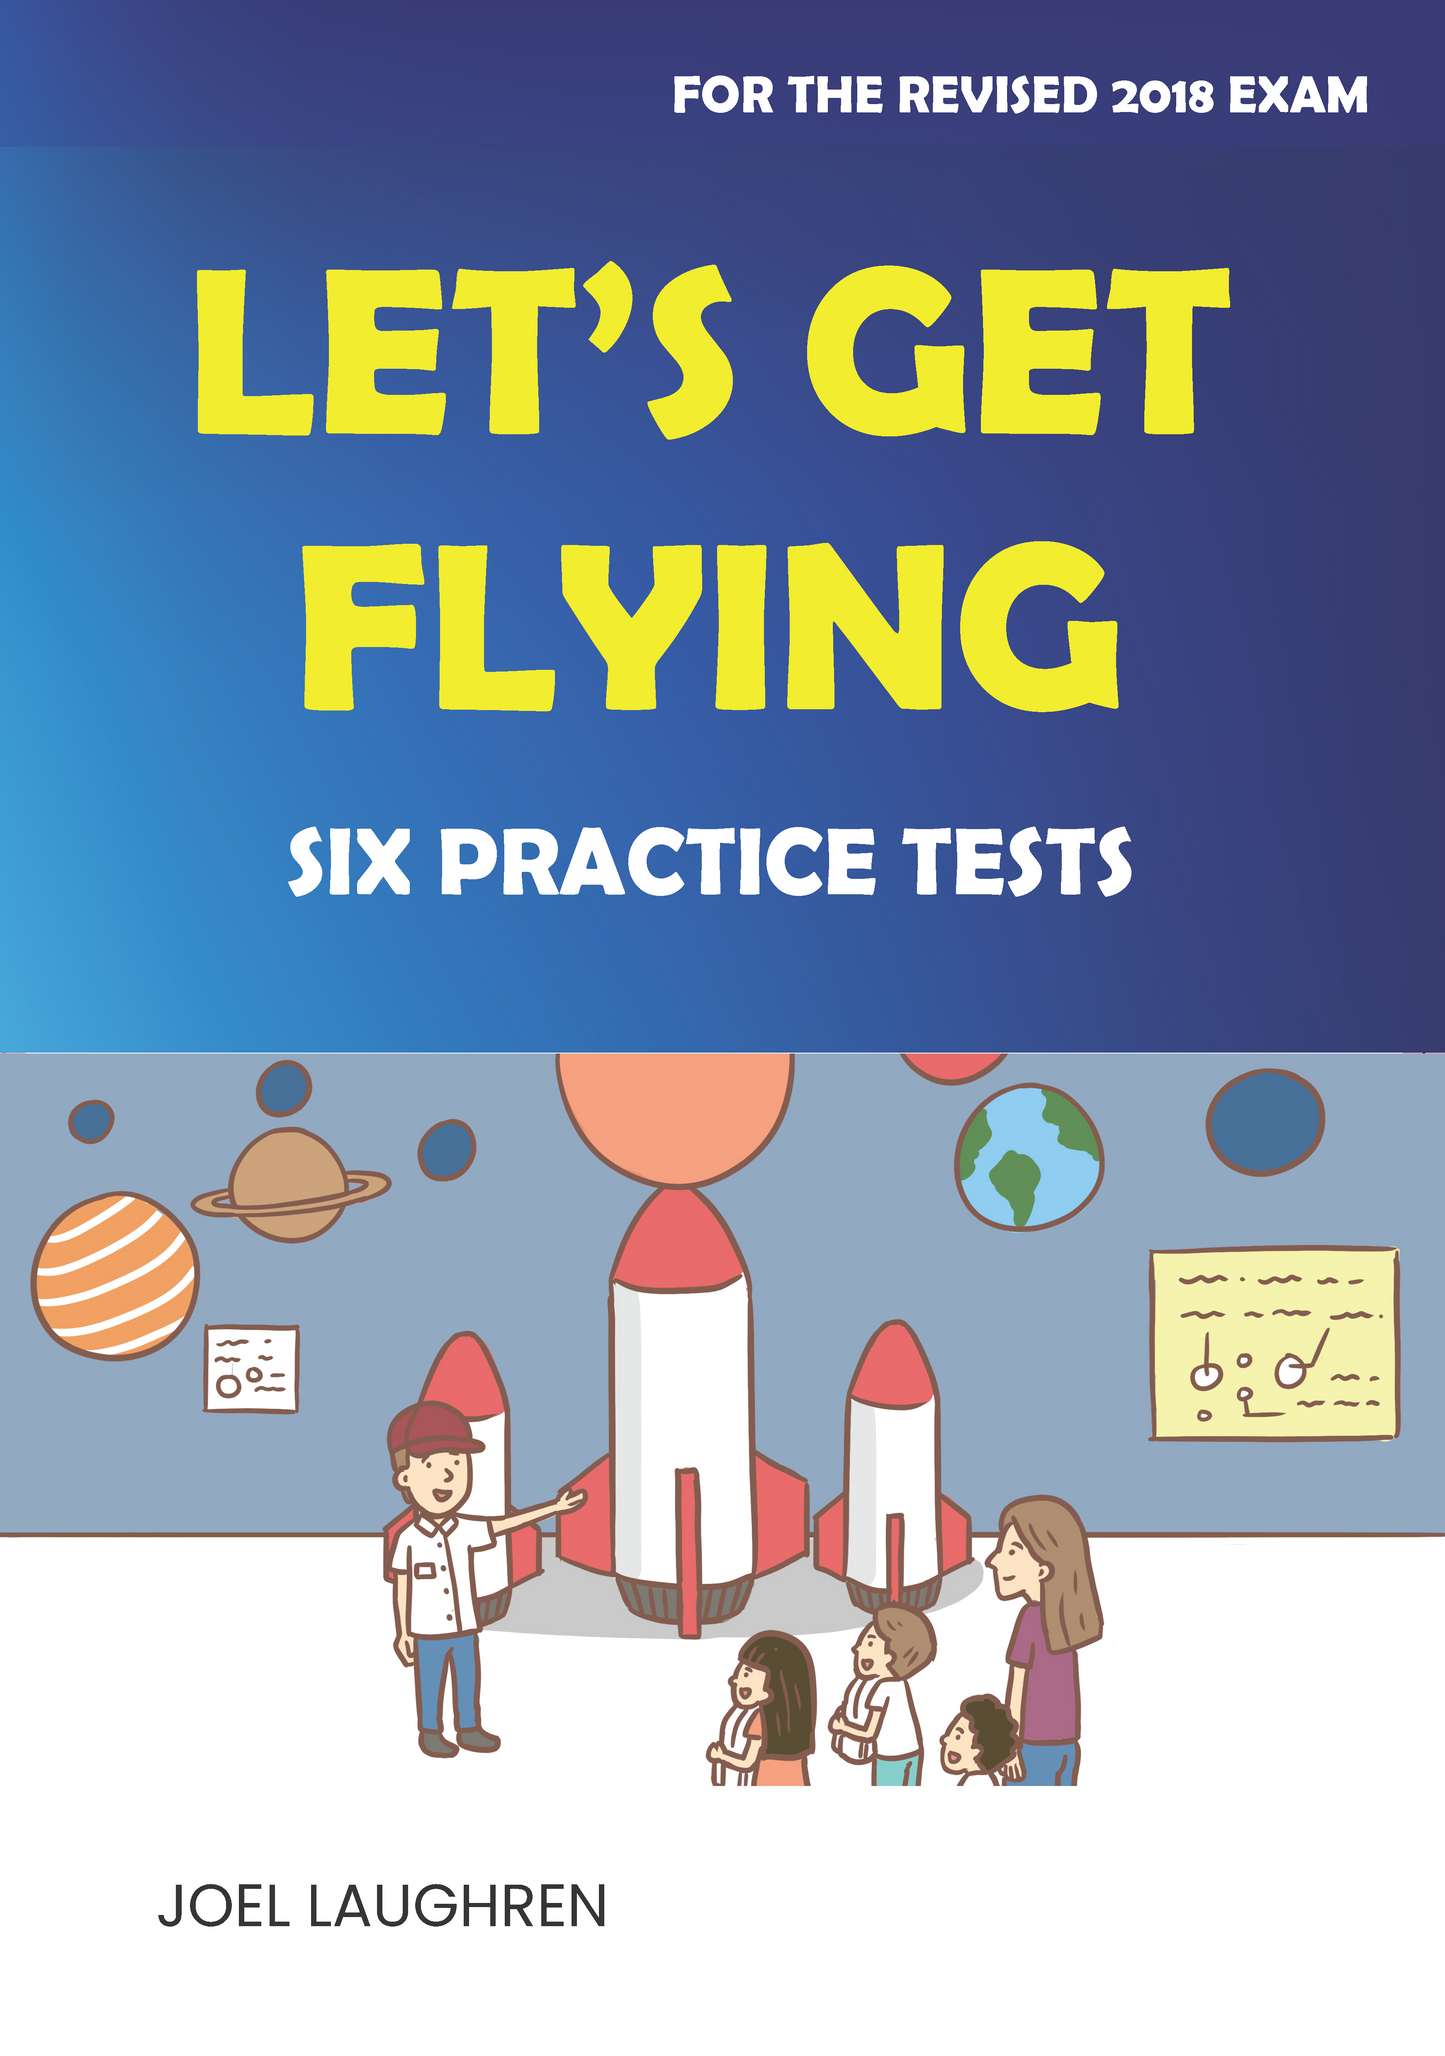 Let's Get Flying - Six Practice Tests